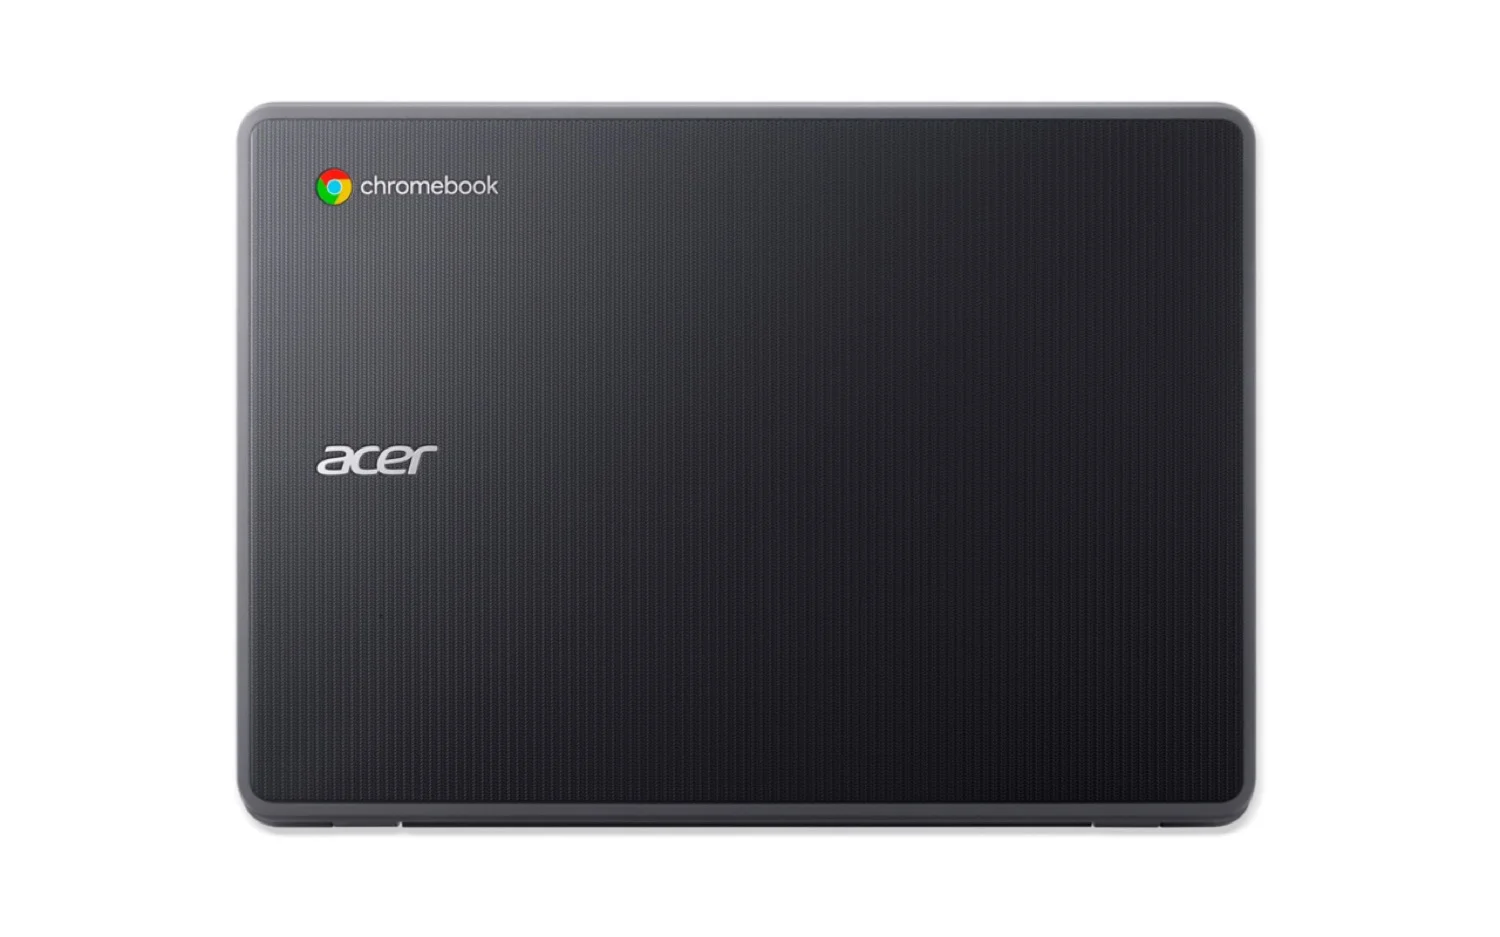 Acer Chromebook Vero debuta a nivel global en el mercado educativo